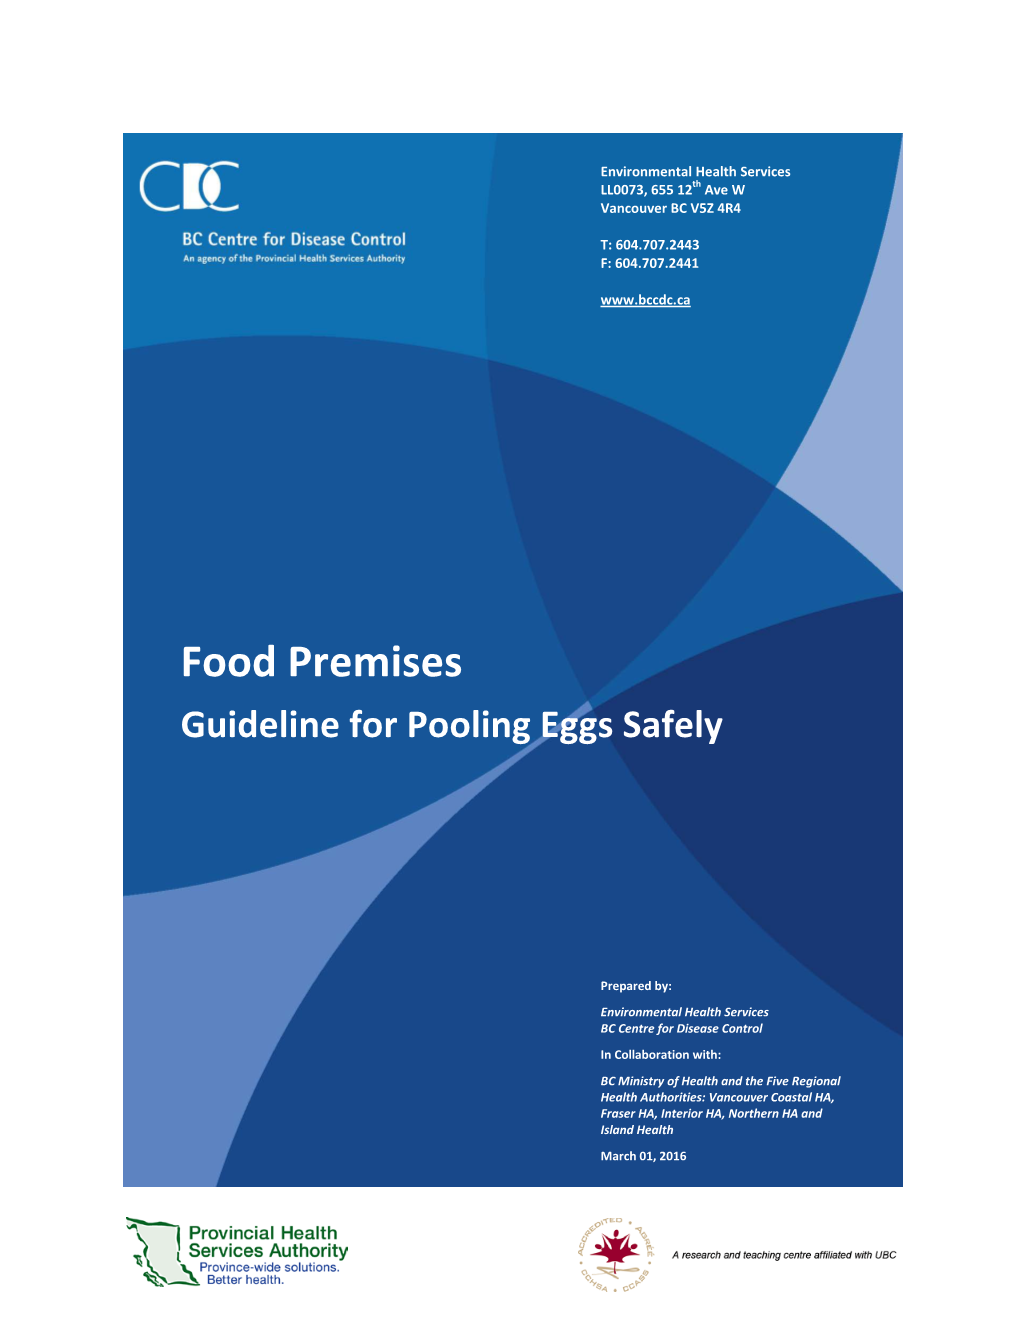 Food Premises – Guideline for Pooling Eggs Safely